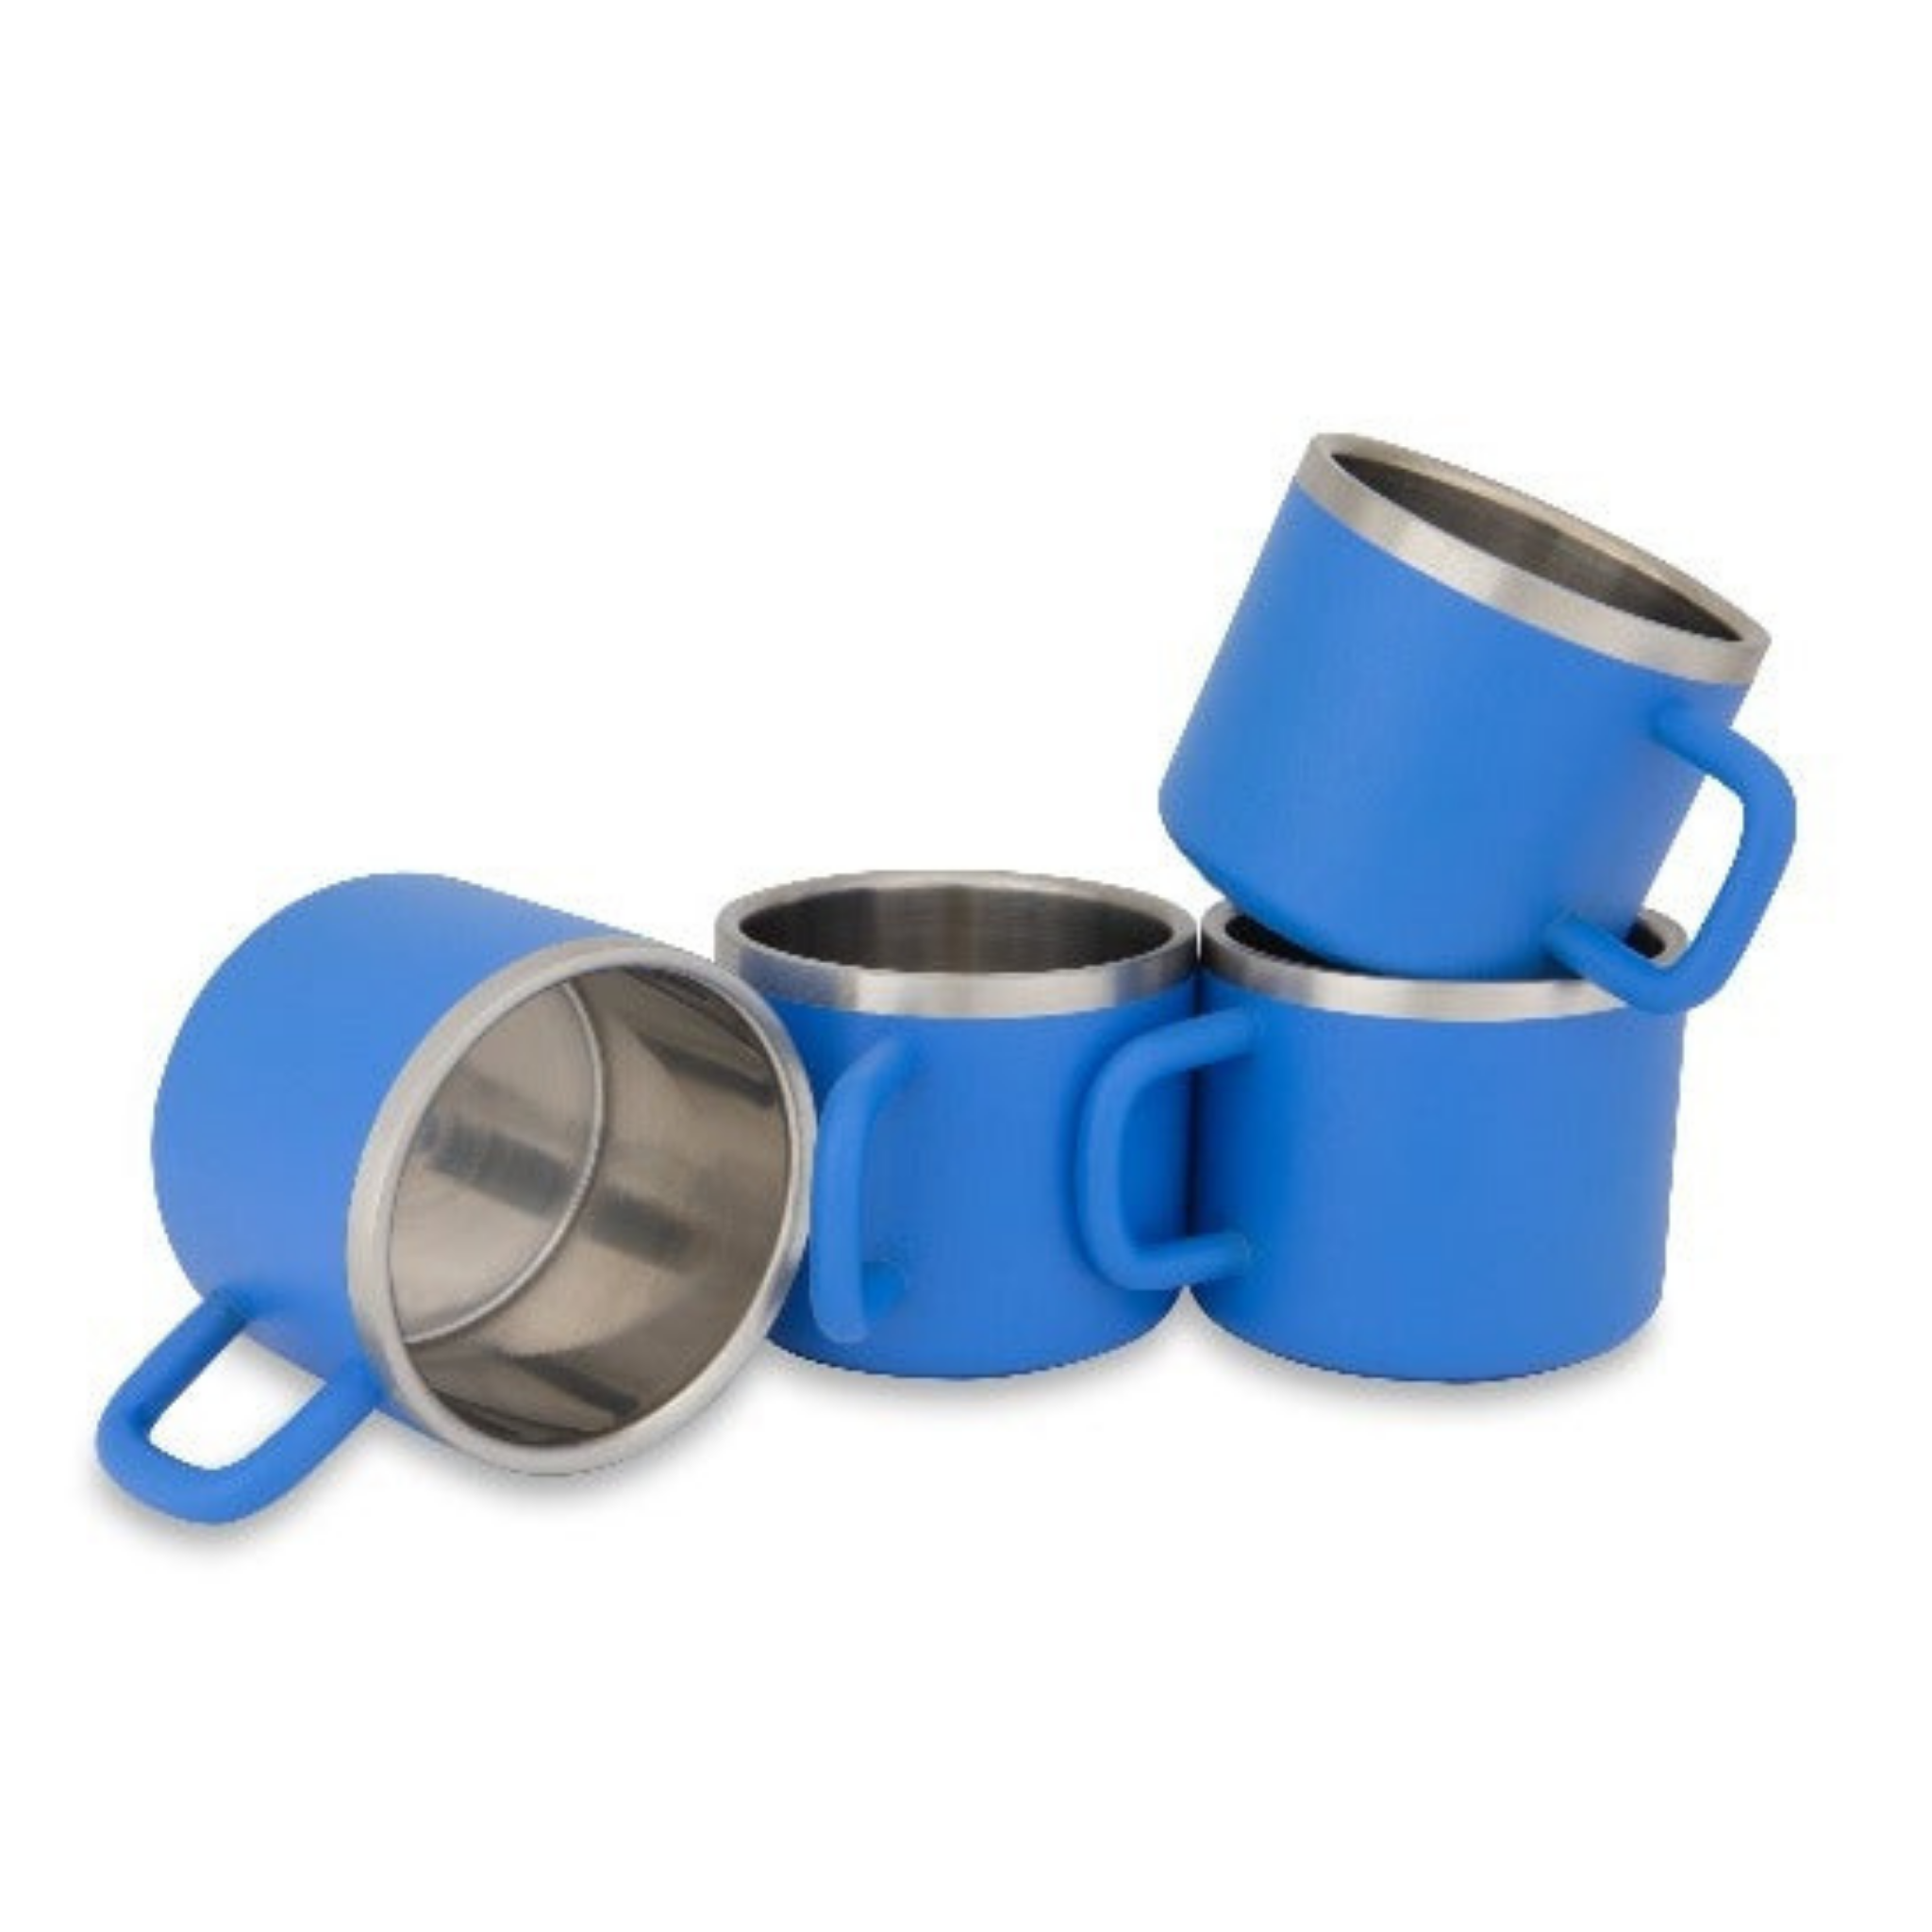 BTäT- Insulated Espresso Cups (5 oz) set of 4 – BTAT